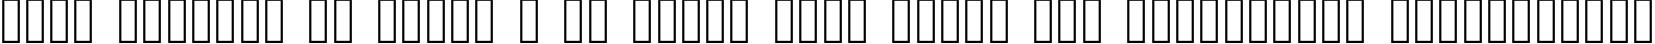 Пример написания шрифтом Newtype текста на украинском